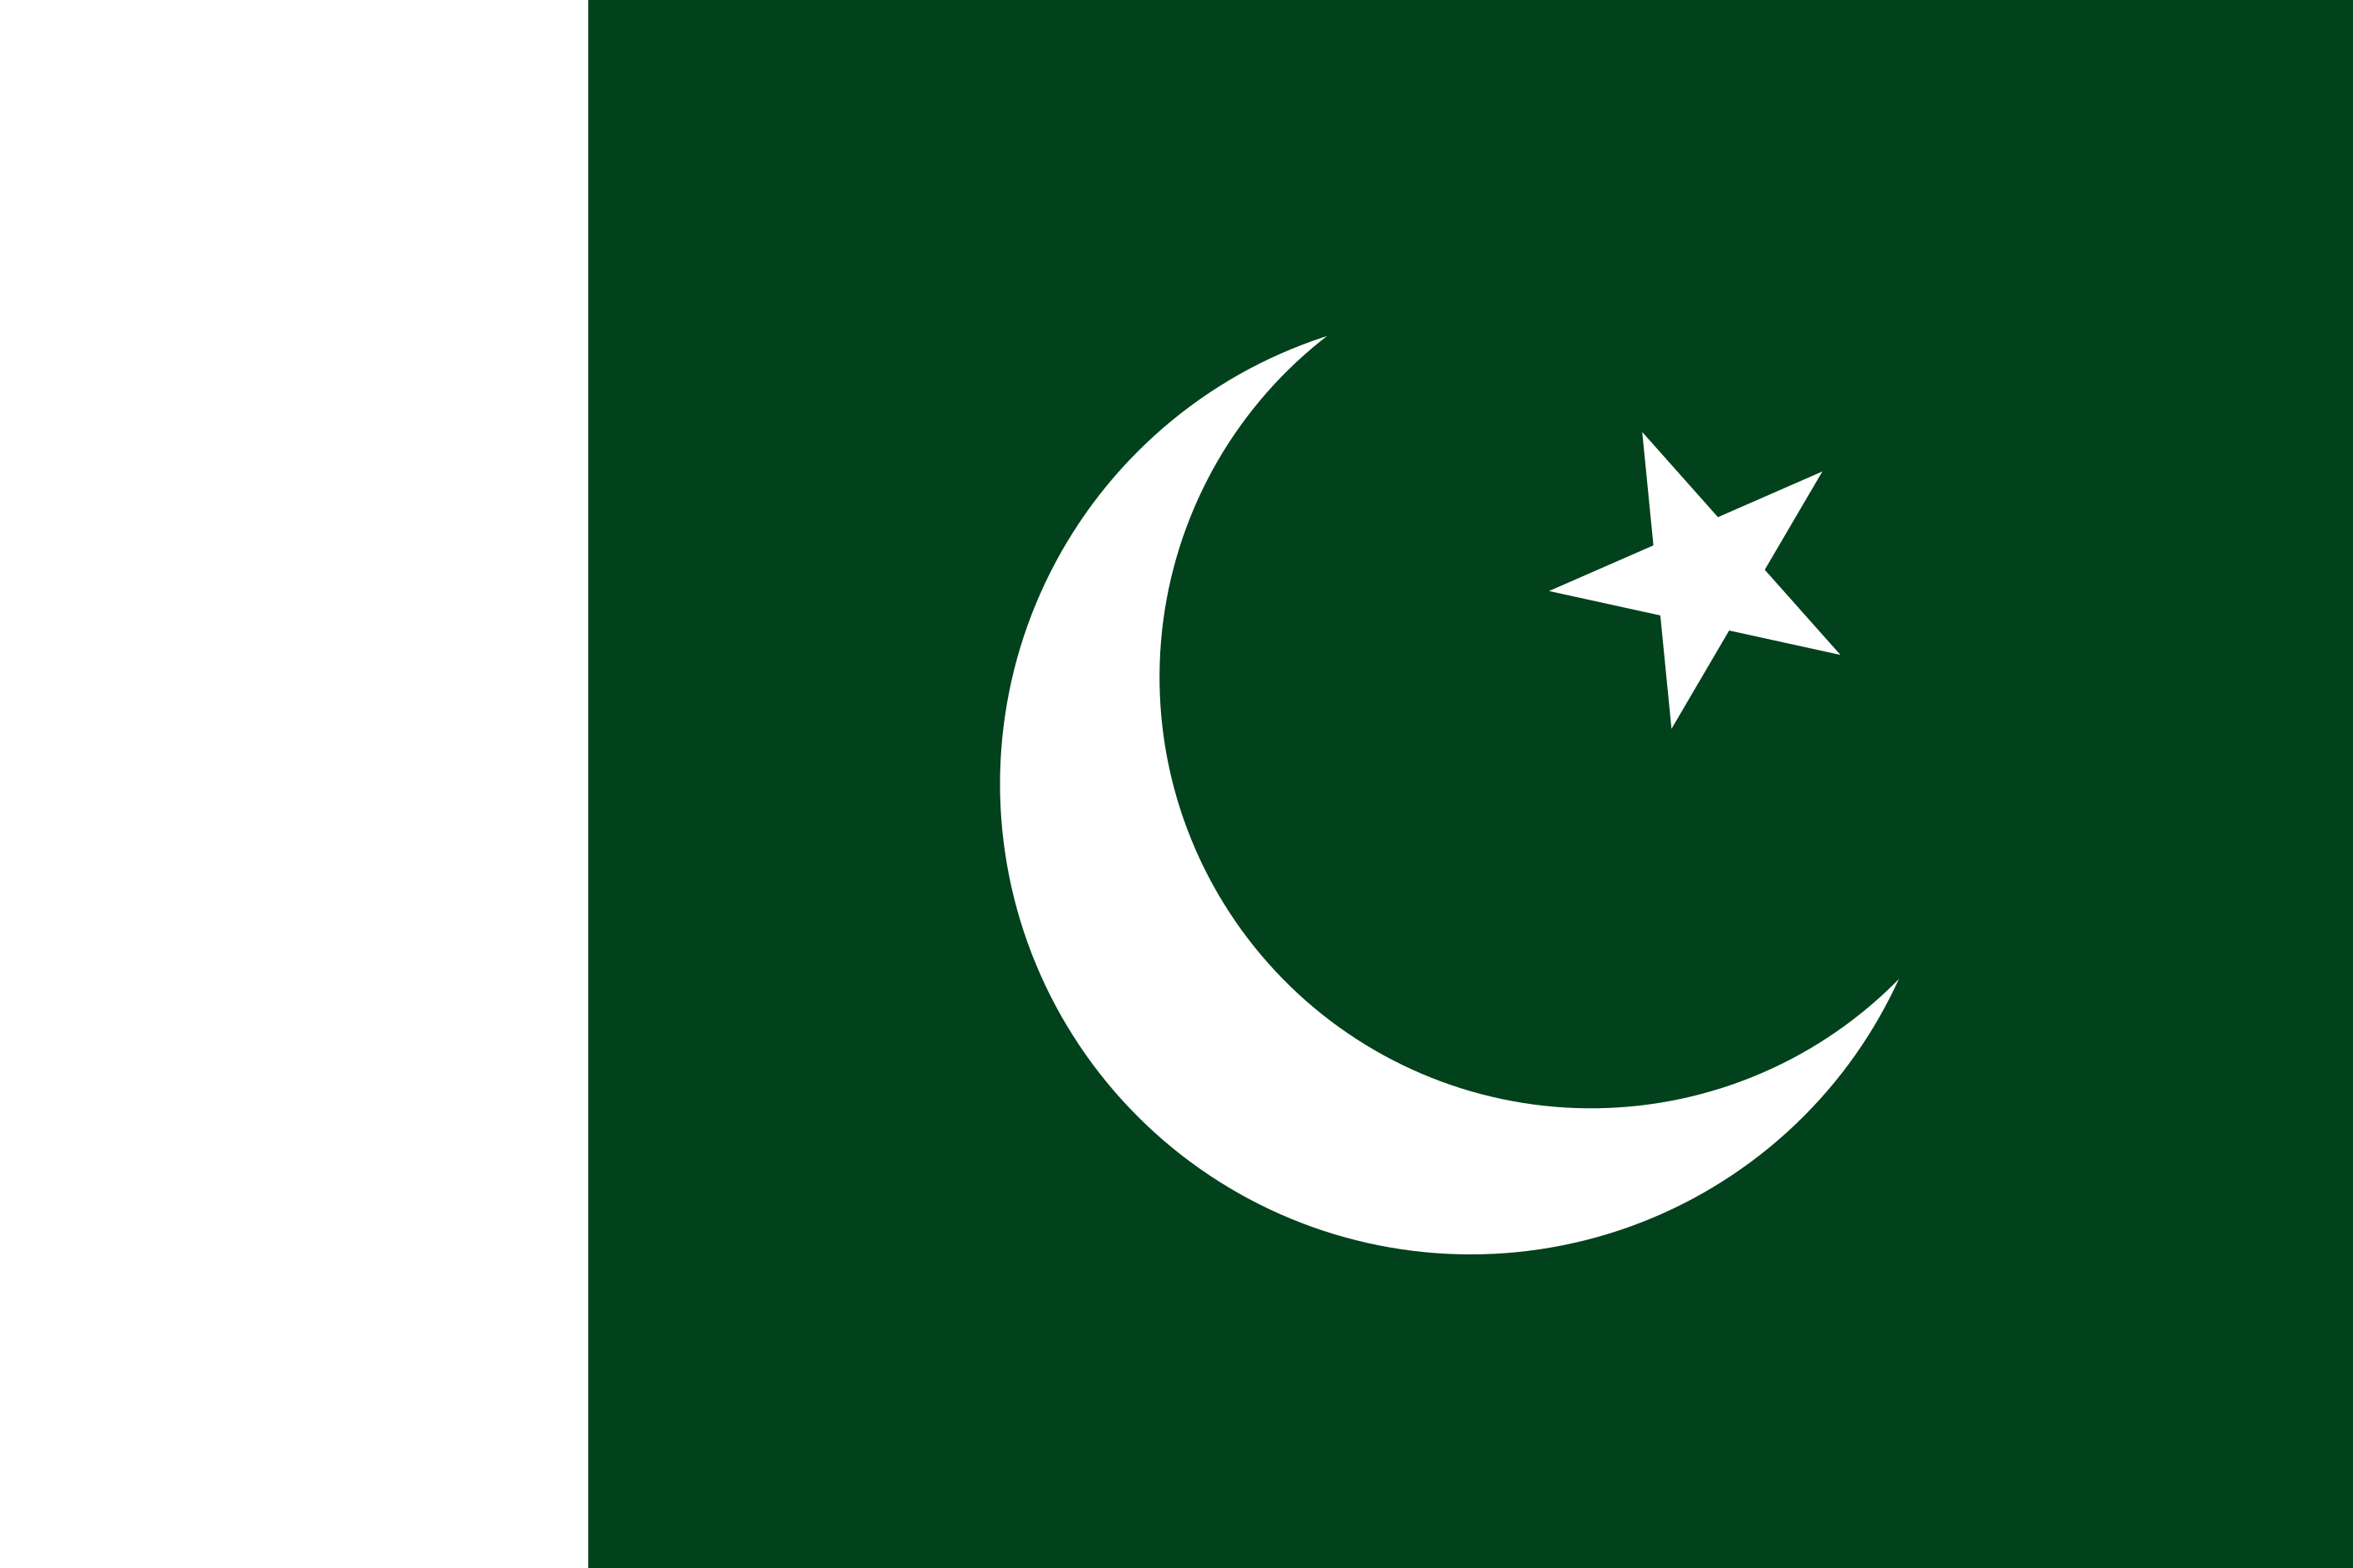 Free Pakistan Flag Documents: PDF, DOC, DOCX, HTML & More!